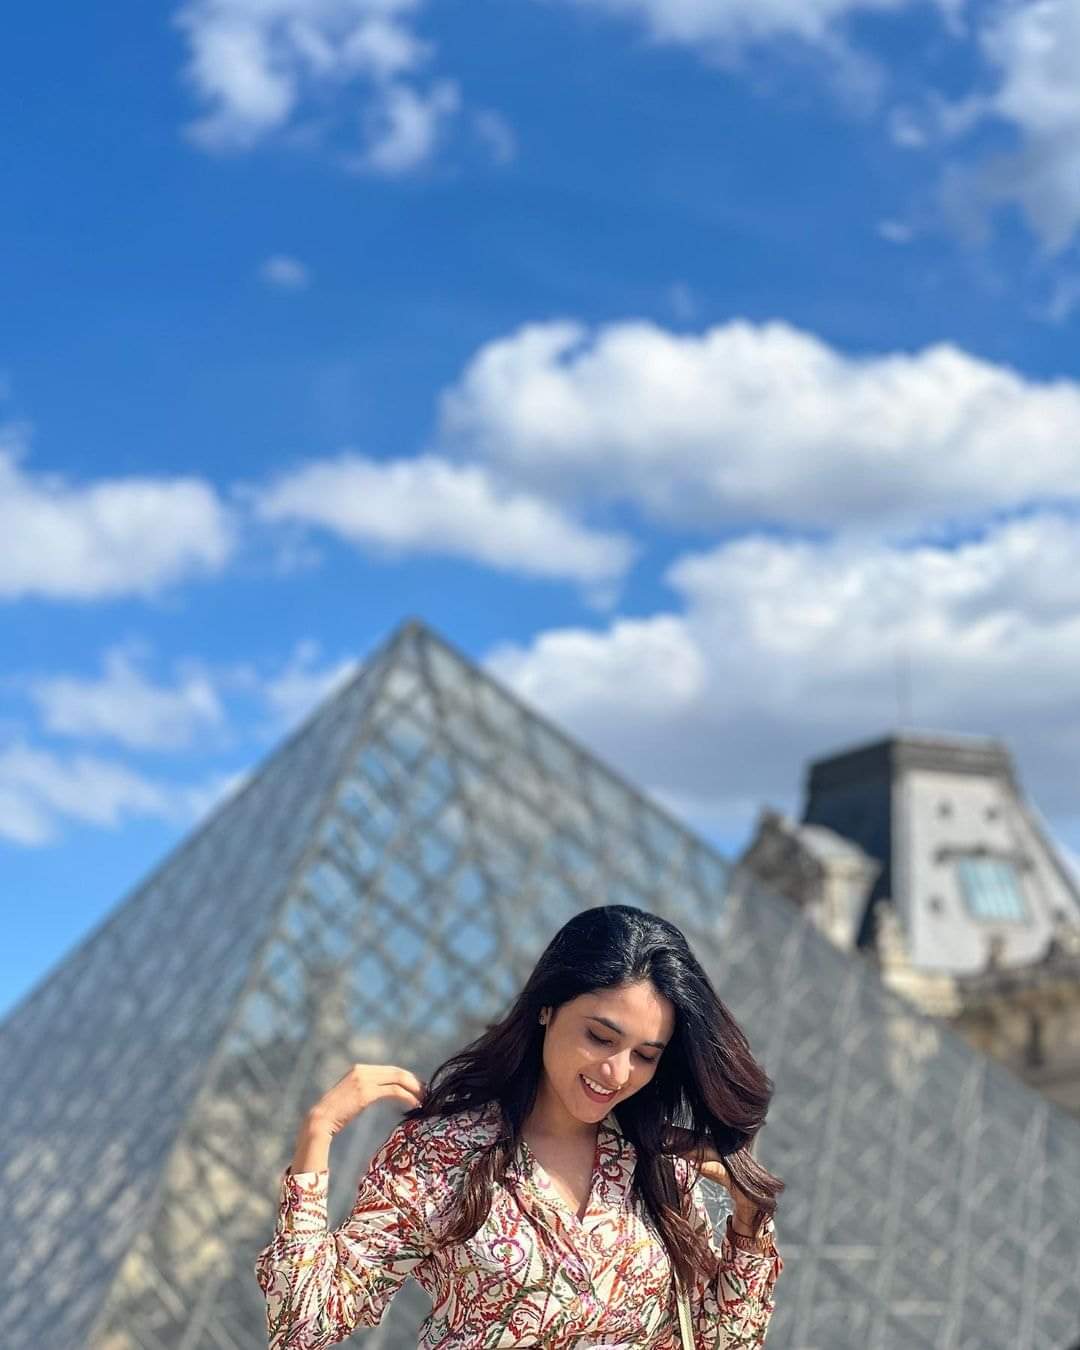 Priyanka Mohan LATEST Photos from Louvre Pyramid Museum Paris France